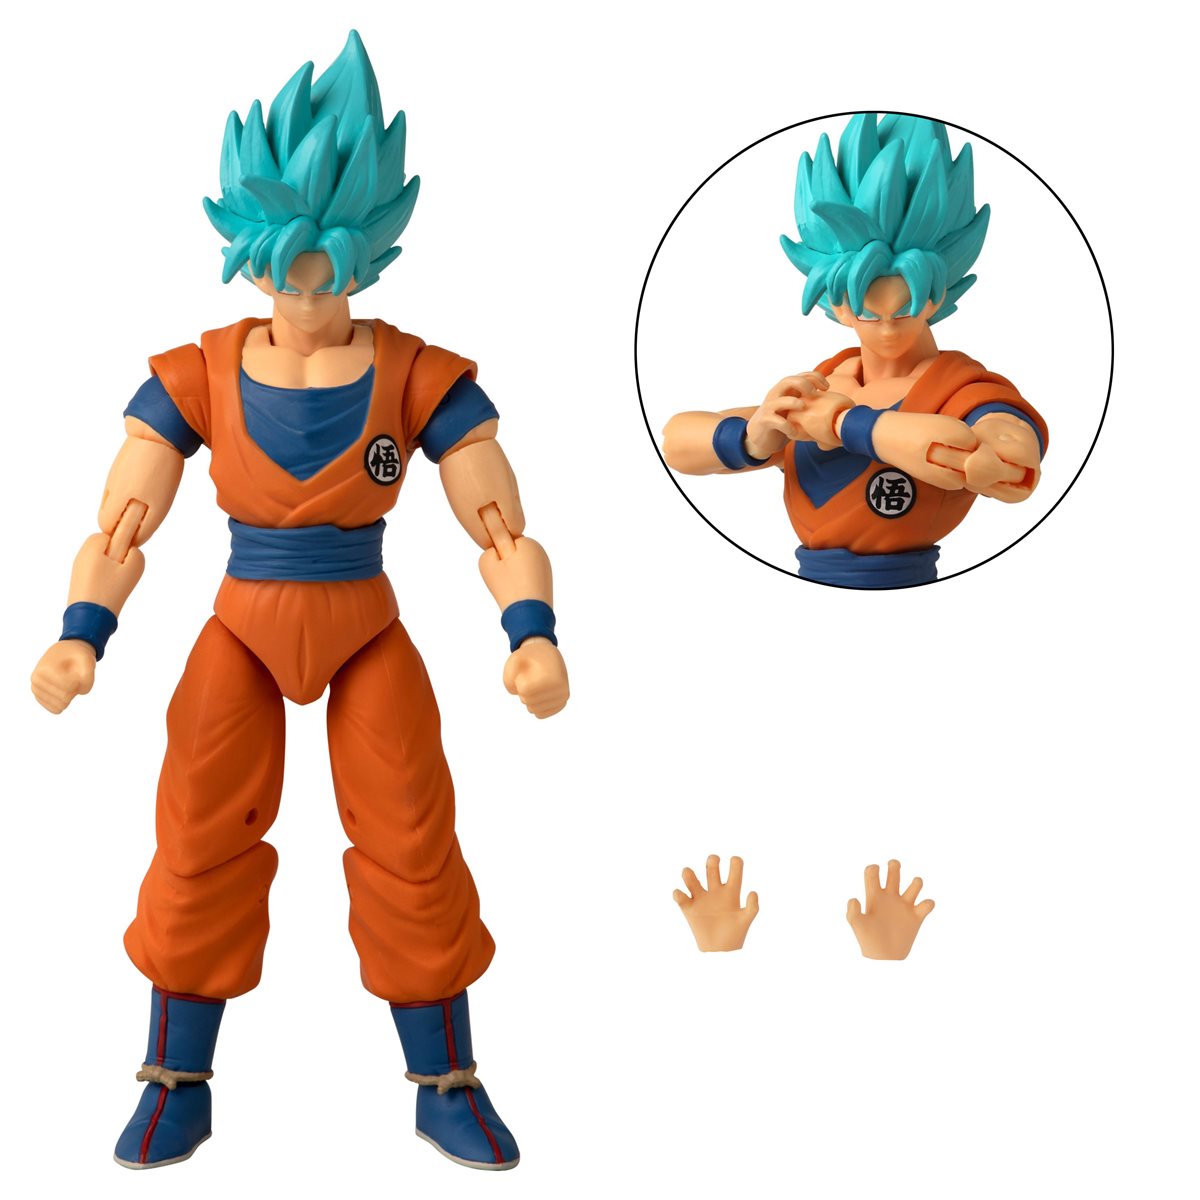  Dragon Ball Super - Dragon Stars Super Saiyan Blue Vegeta  Figure (Series 4) : Toys & Games